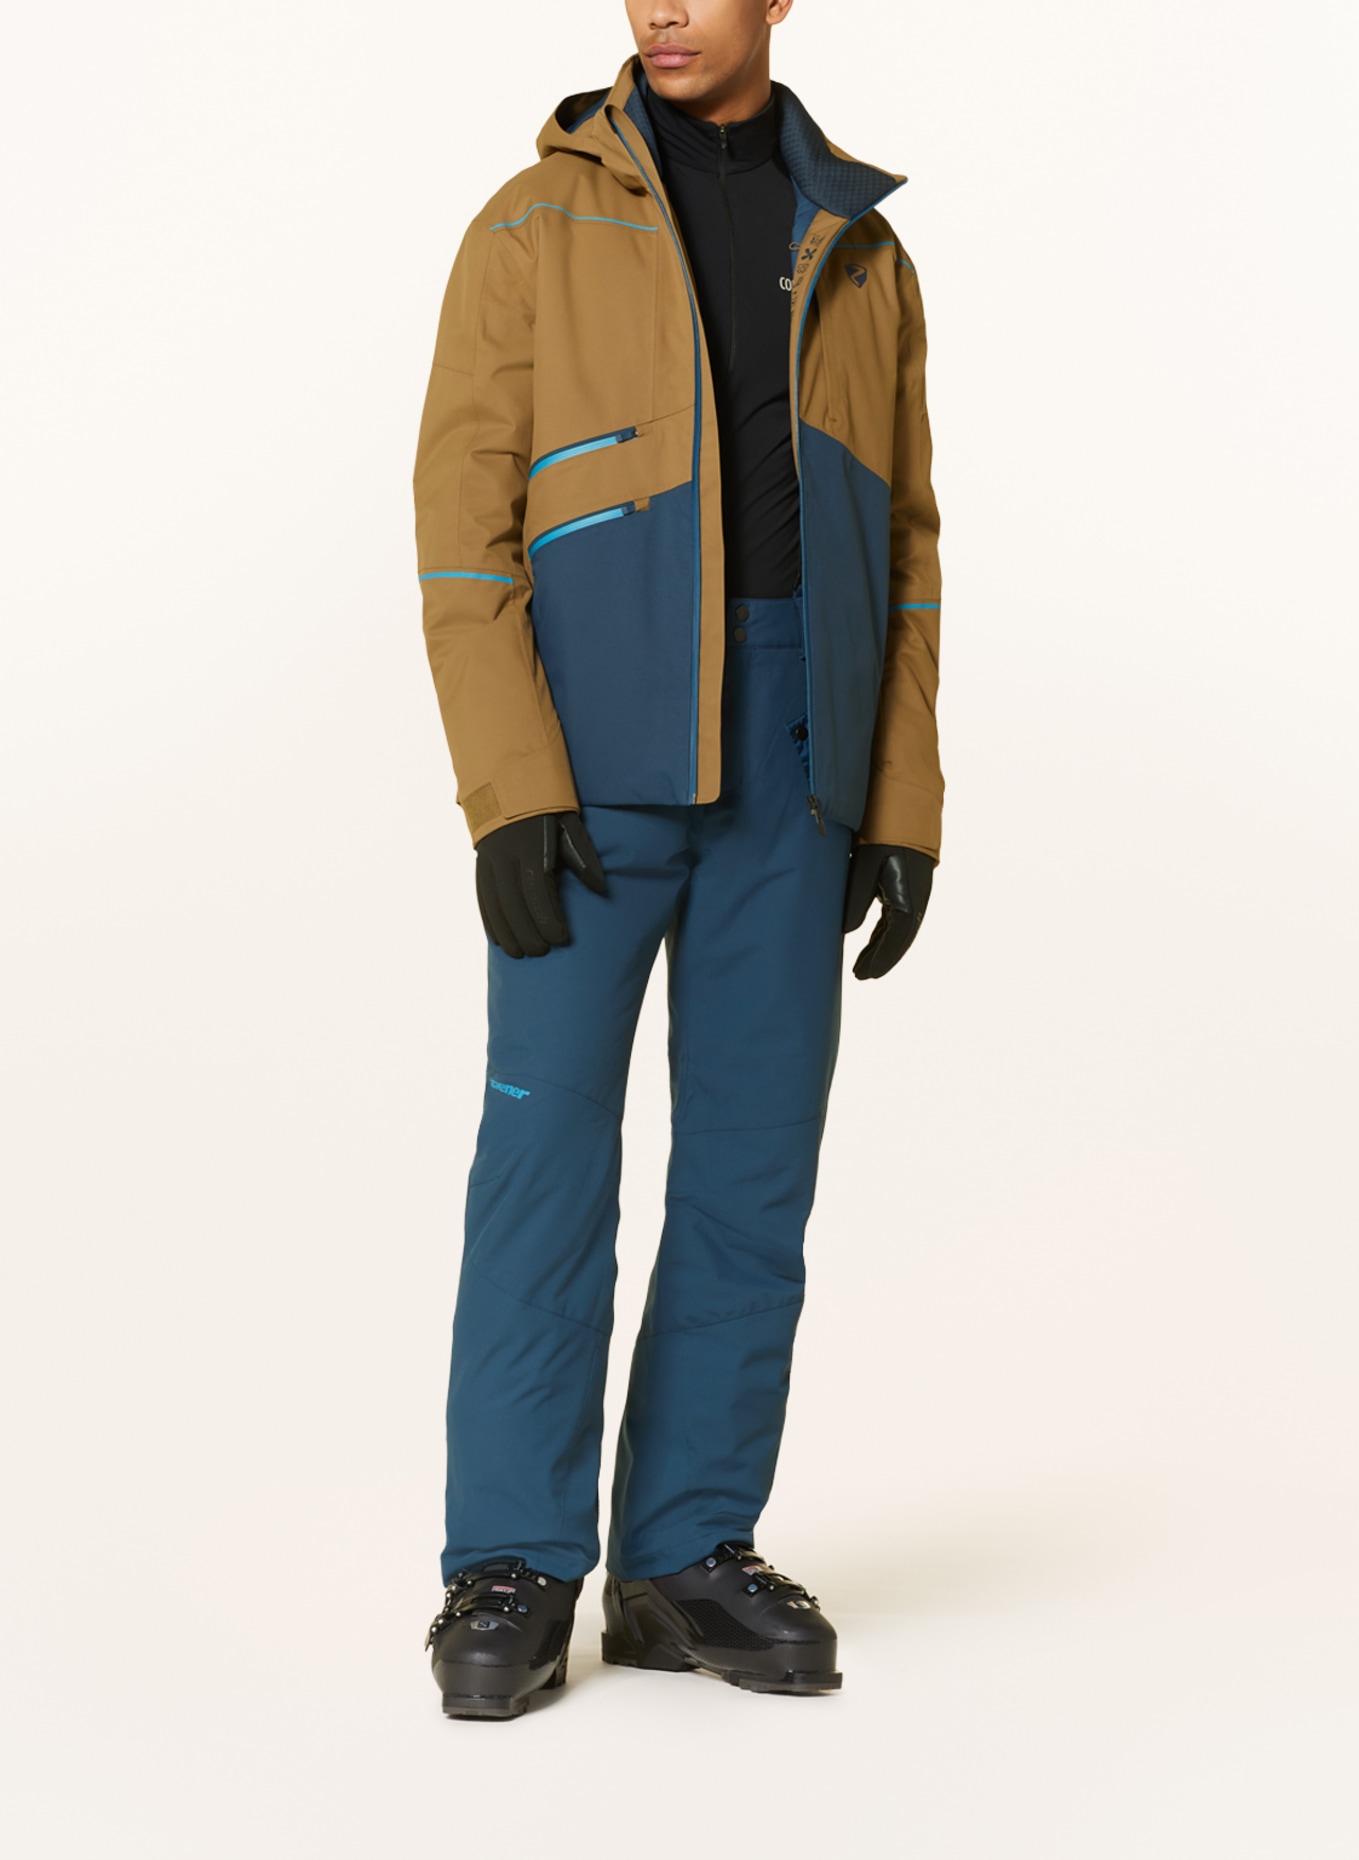 ziener Ski jacket TOACA in blue brown/ dark